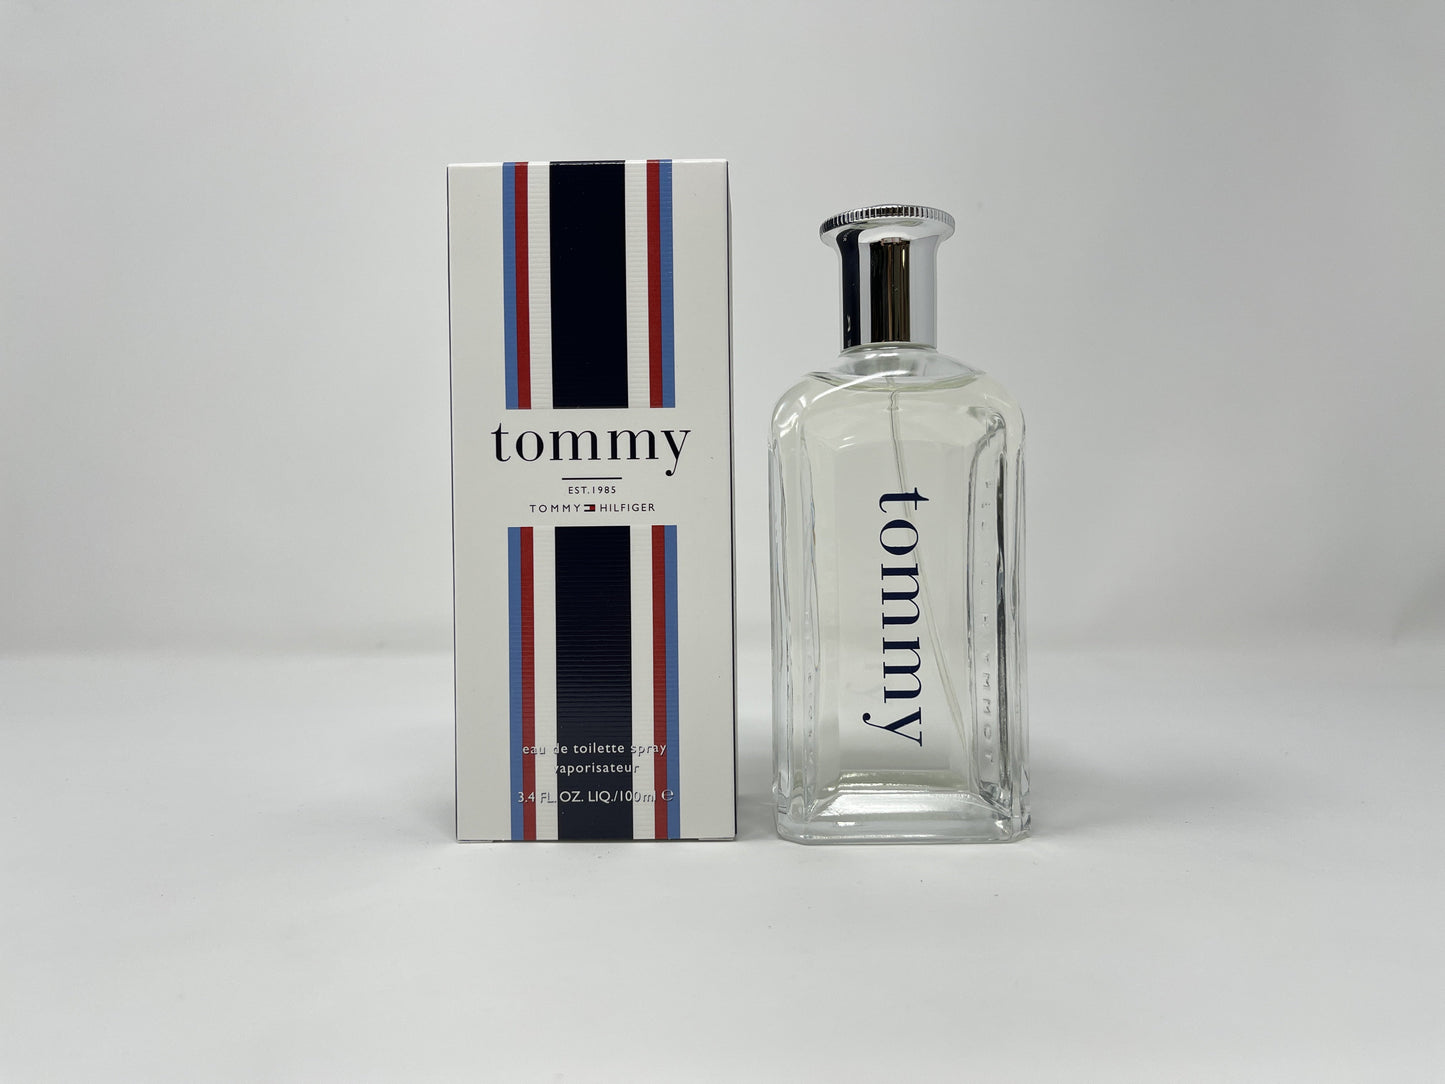 Tommy by Tommy Hilfiger for Men 3.4 oz Eau De Toilette Spray